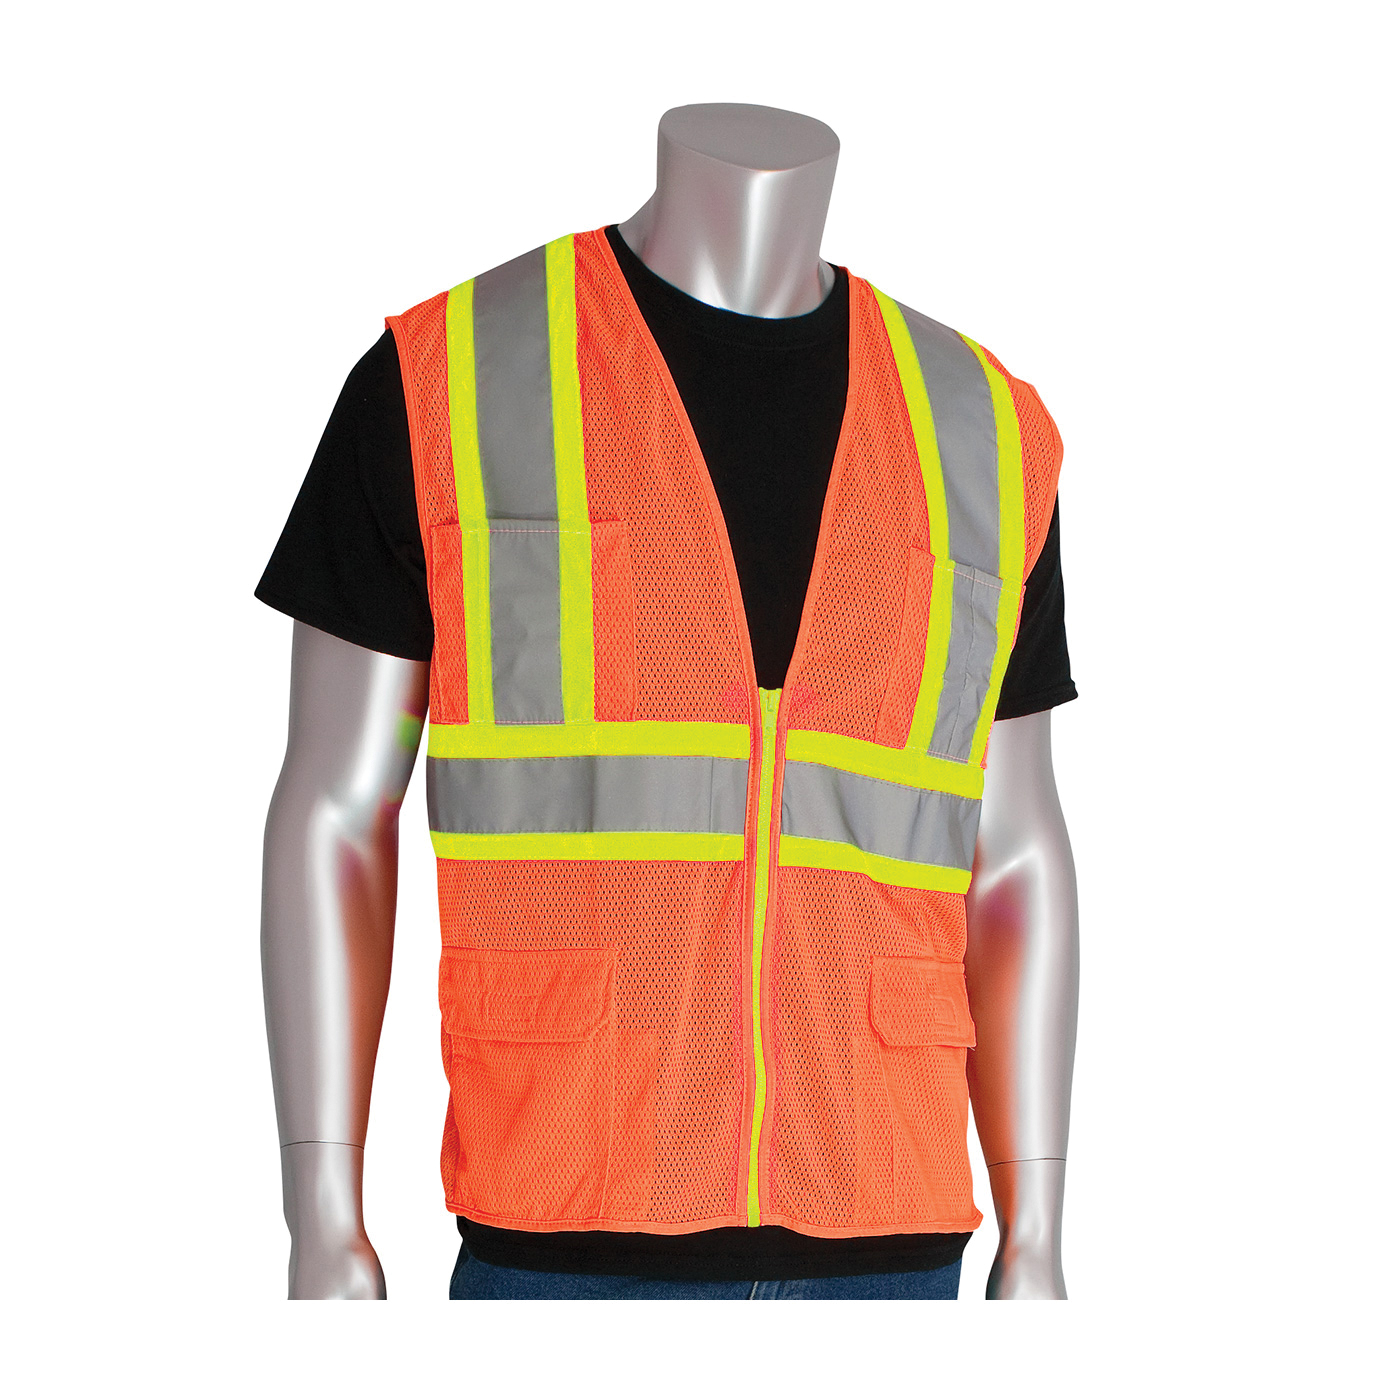 PIP® 302-MAPMOR-2X 2-Tone Premium Surveyor Safety Vest, 2XL, Hi-Viz Orange, Polyester, Zipper Closure, 11 Pockets, ANSI Class: Class 2, Specifications Met: ANSI 107 Type R